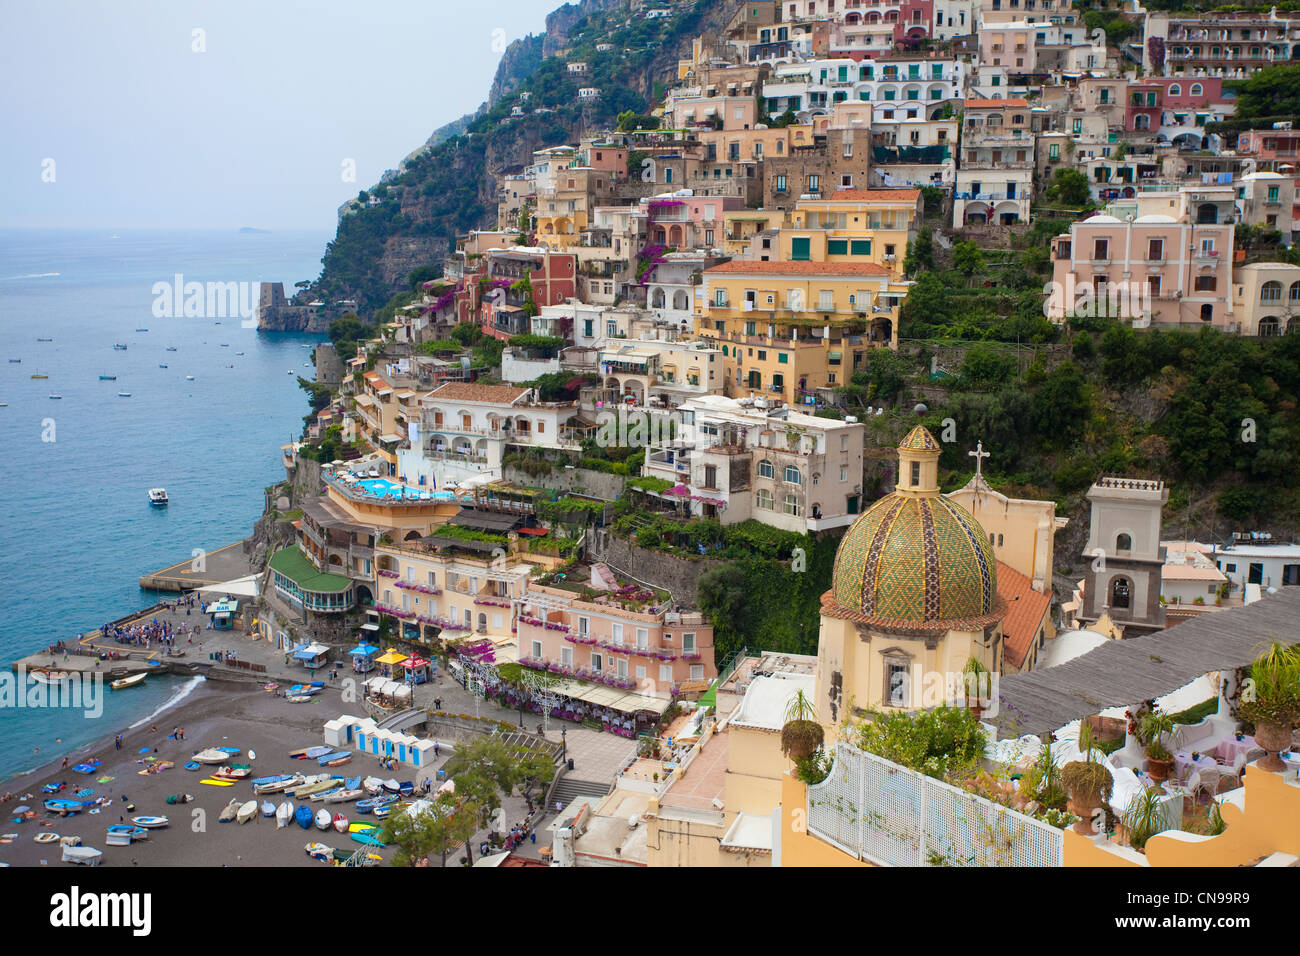 The village Positano, Amalfi coast, Unesco World Heritage site, Campania, Italy, Mediterranean sea, Europe Stock Photo